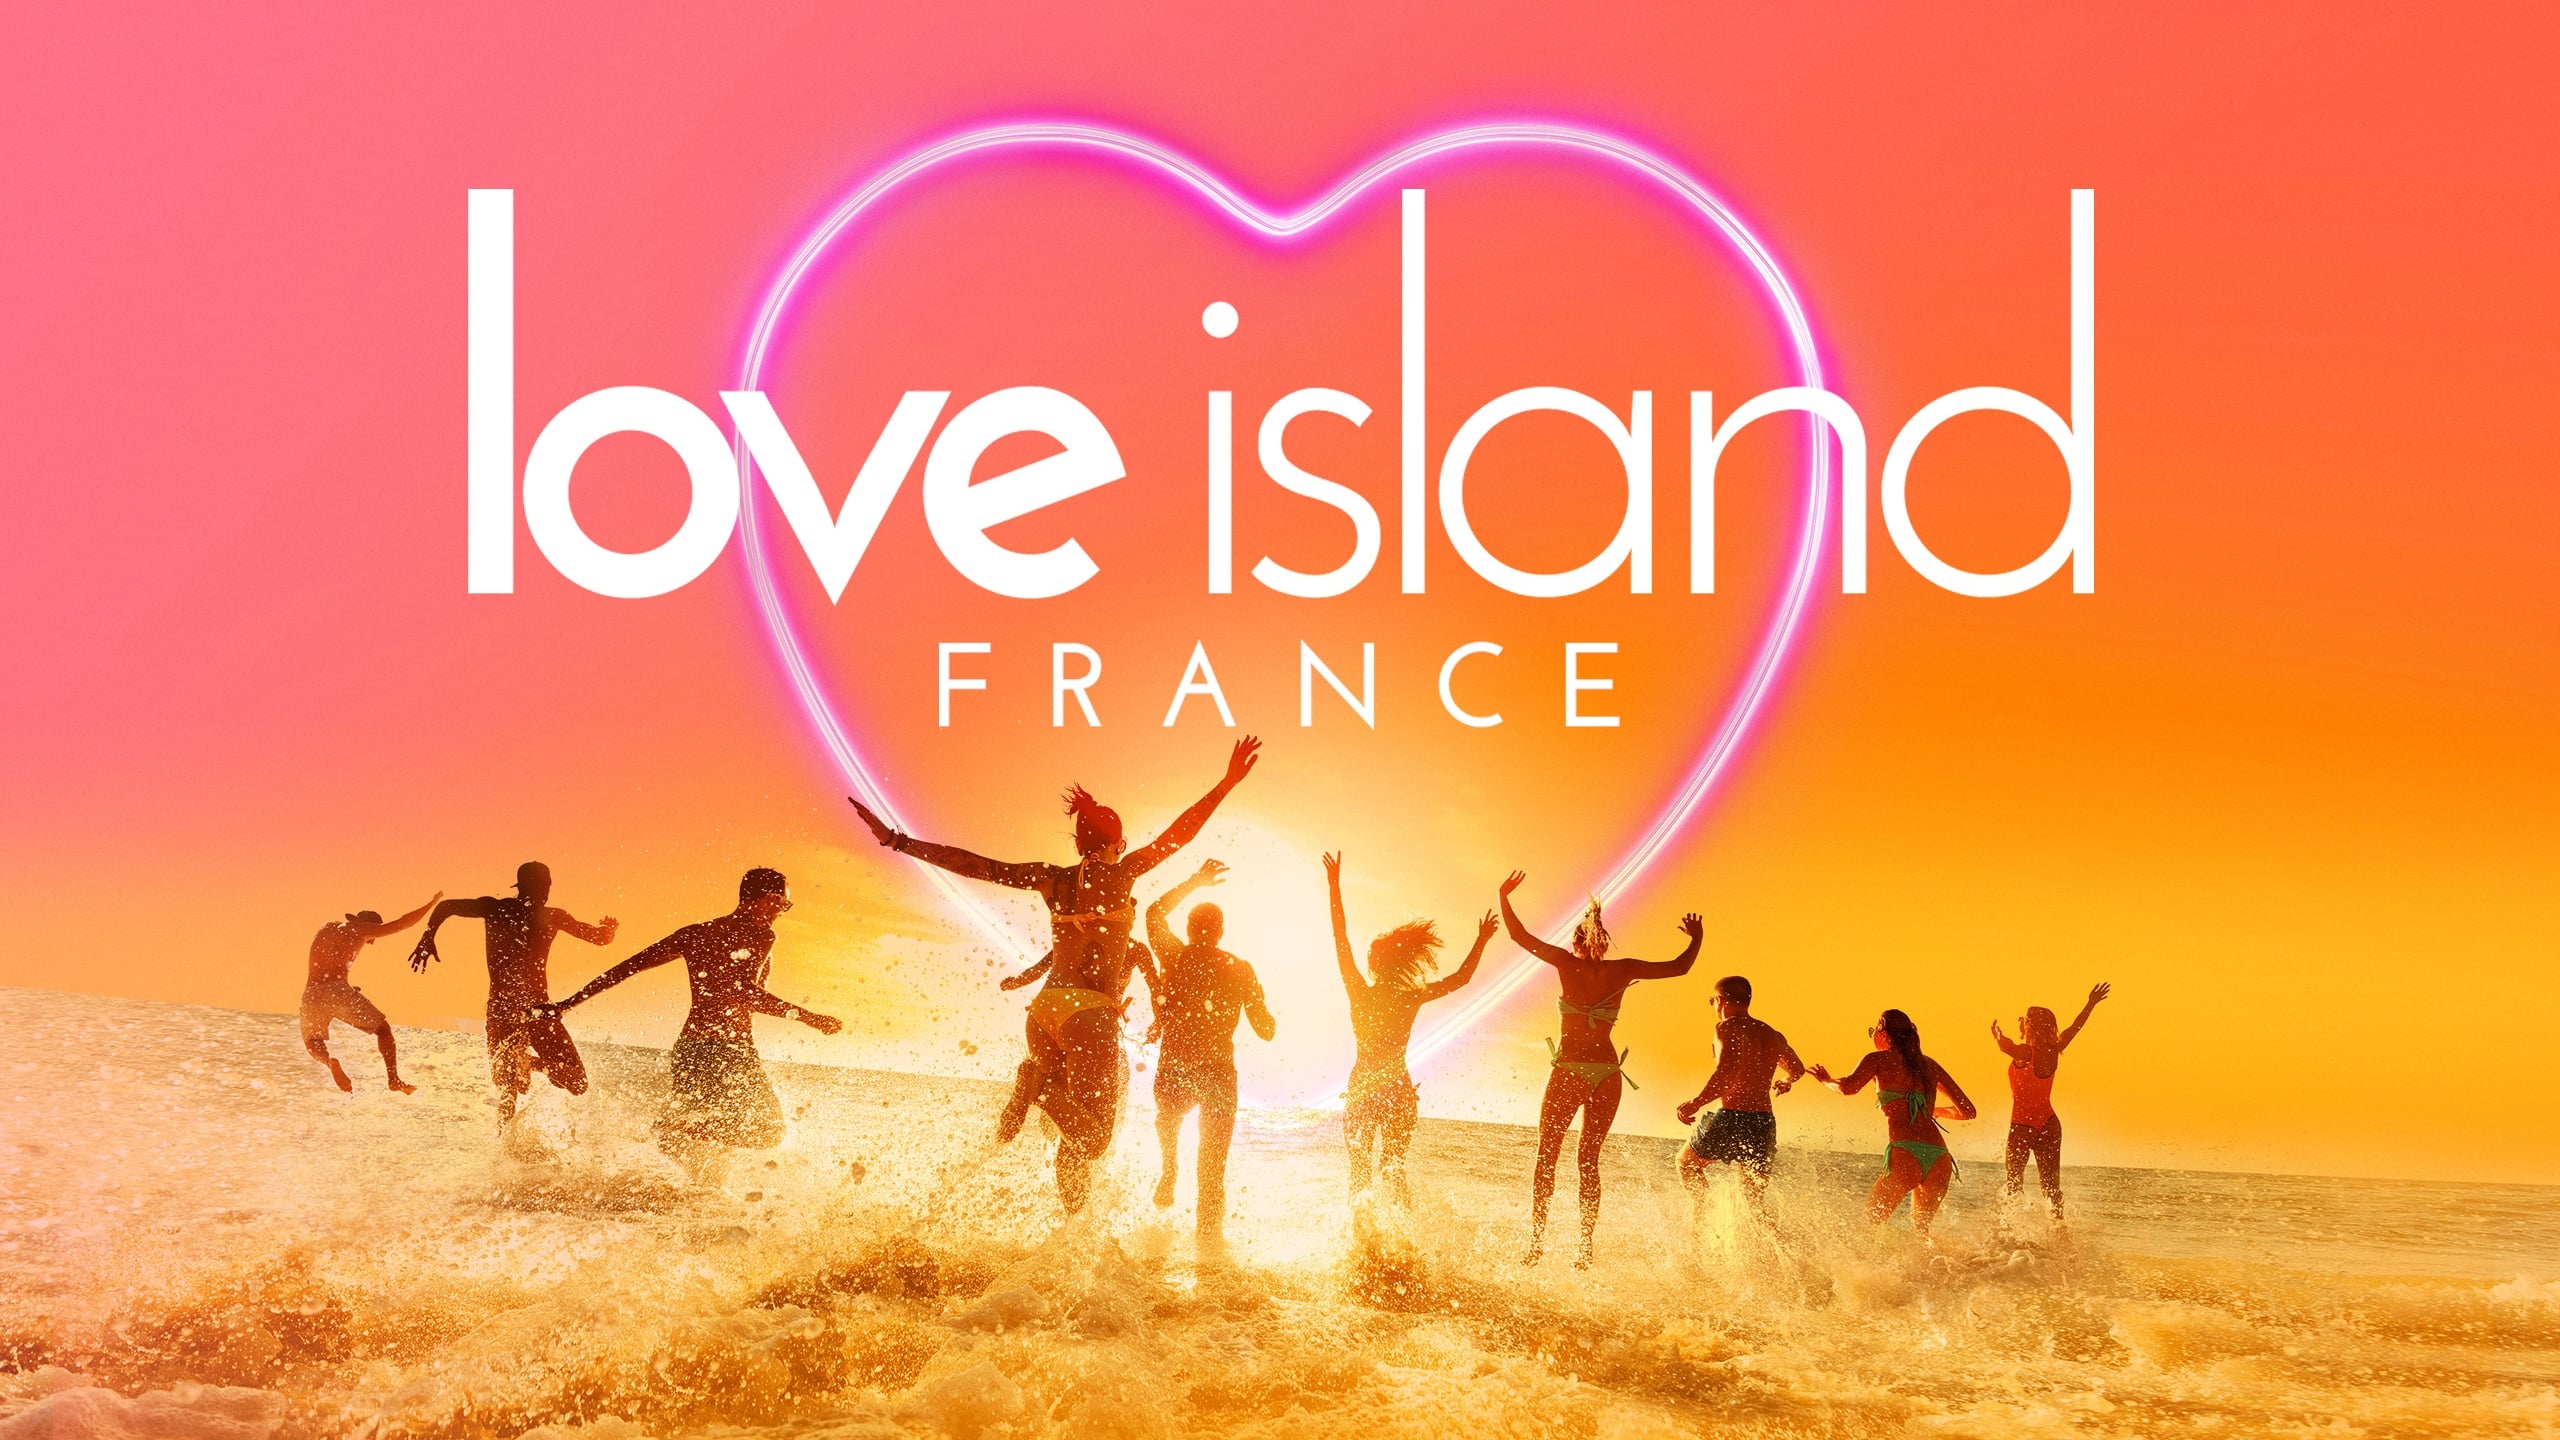 Love Island France TV Show Seasons, Cast, Trailer, Episodes, Release Date